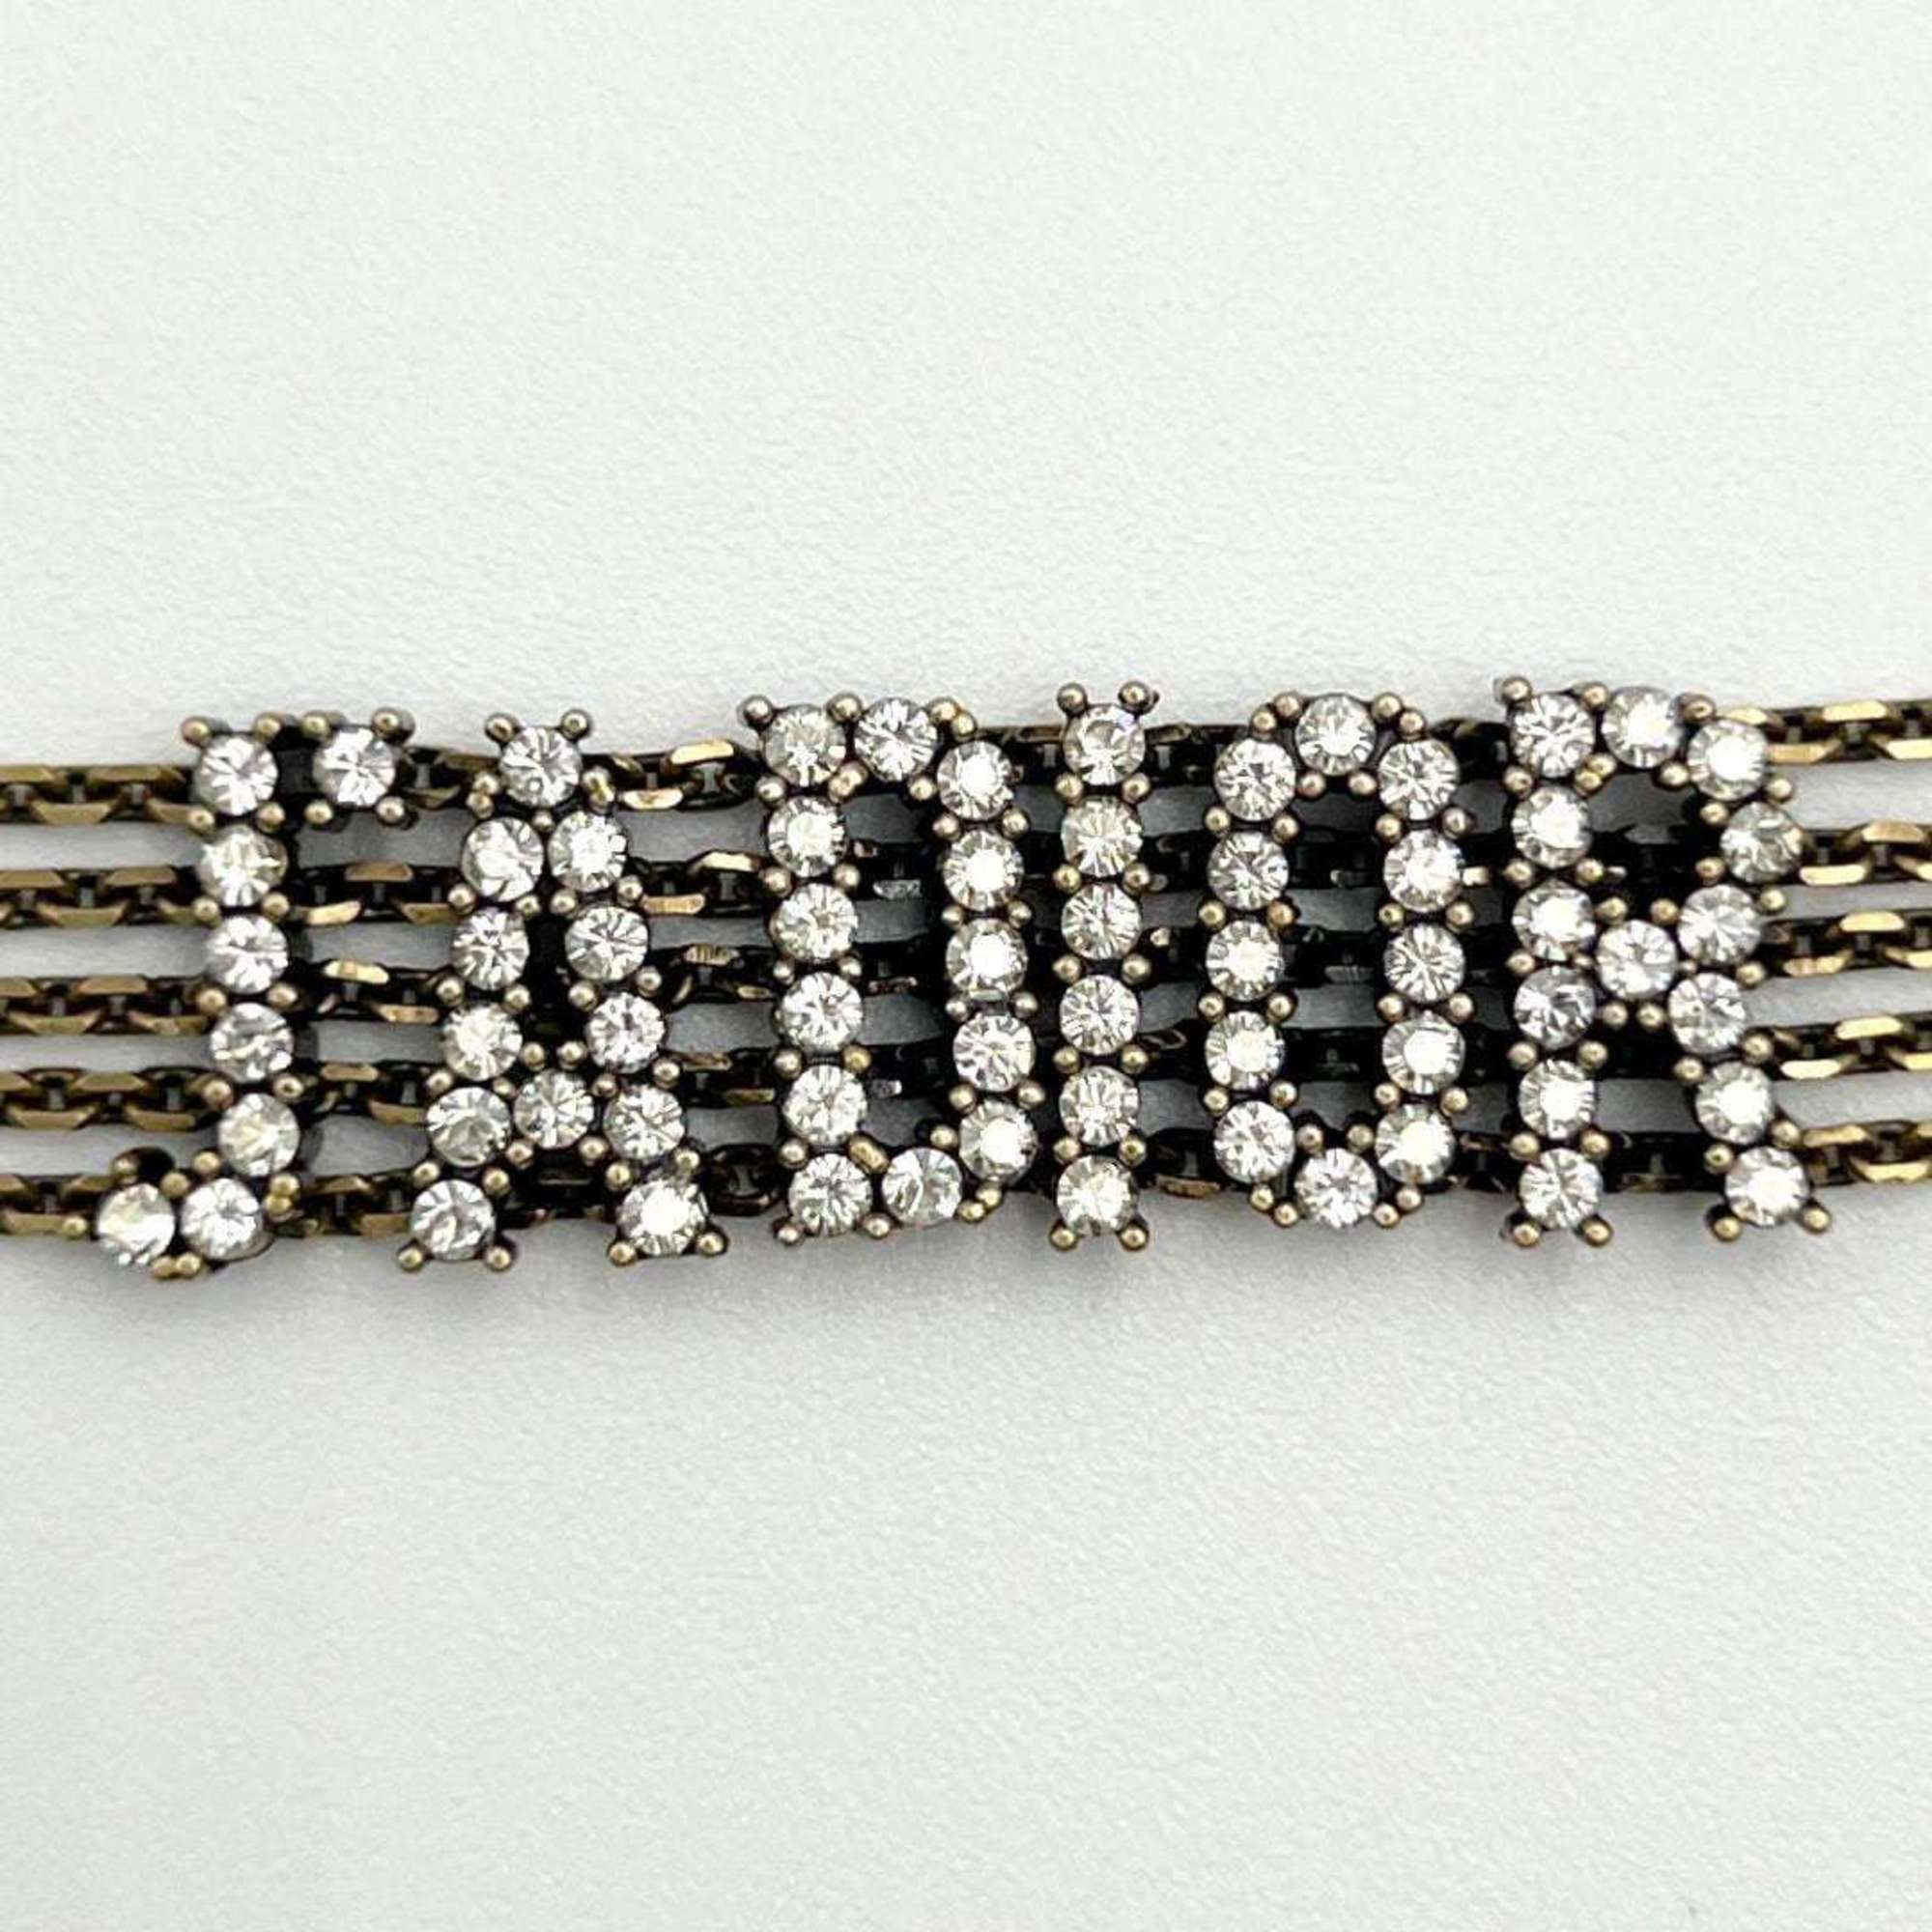 Christian Dior Dior DIOR Women's Choker Necklace Pendant Christian JADIOR